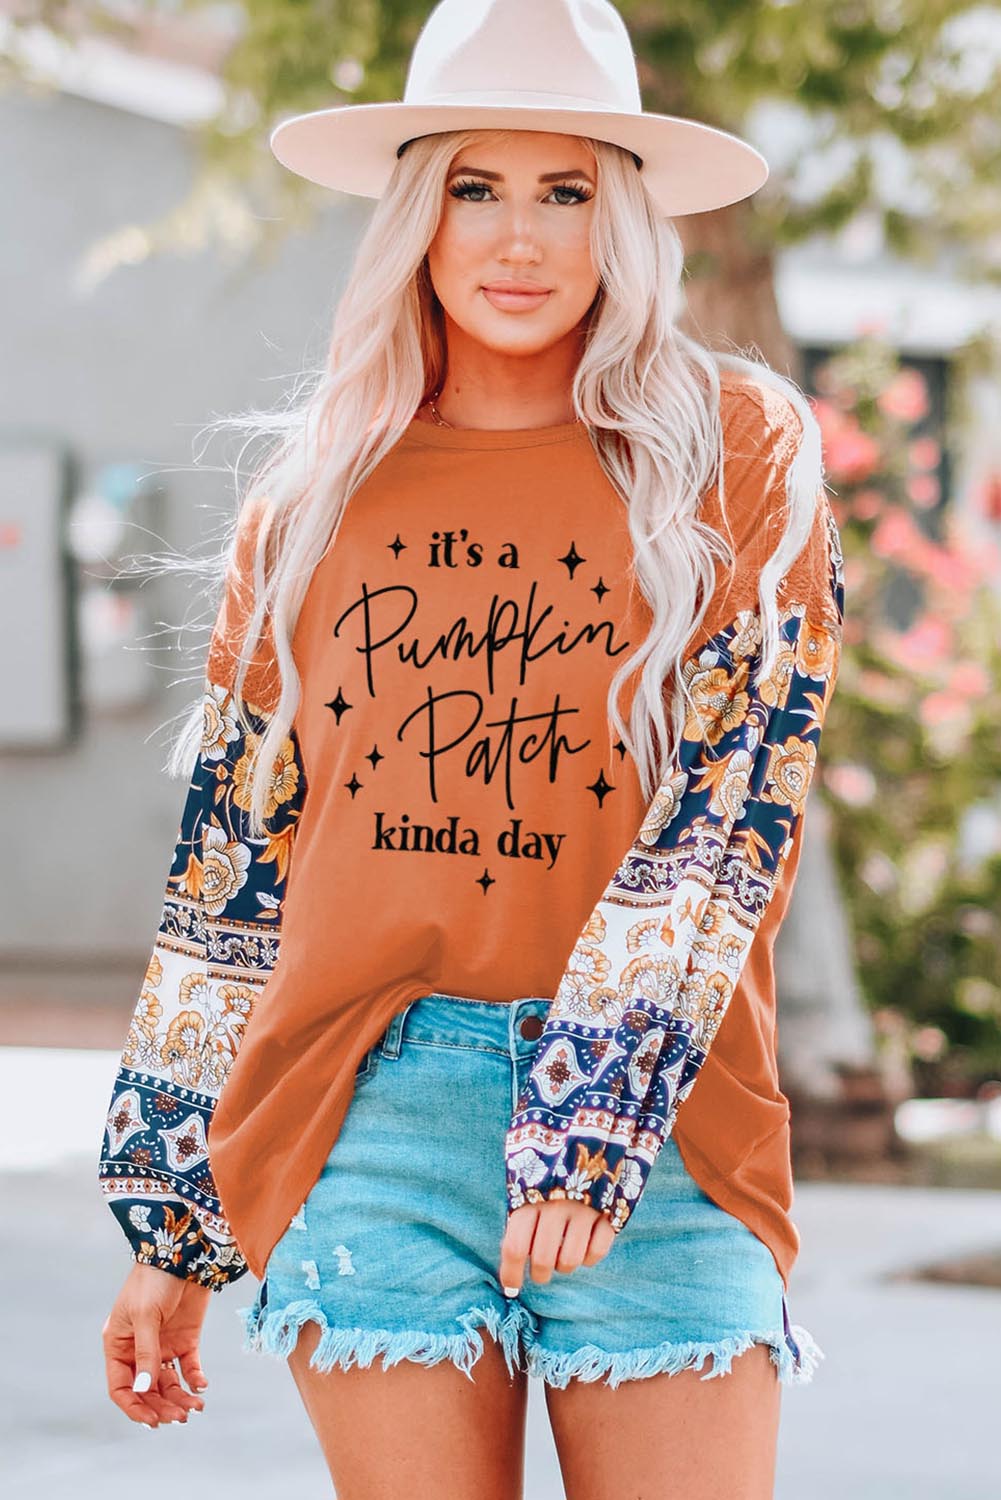 Boho Fall - Autum Pumpkin Graphic Floral Long Sleeve Top